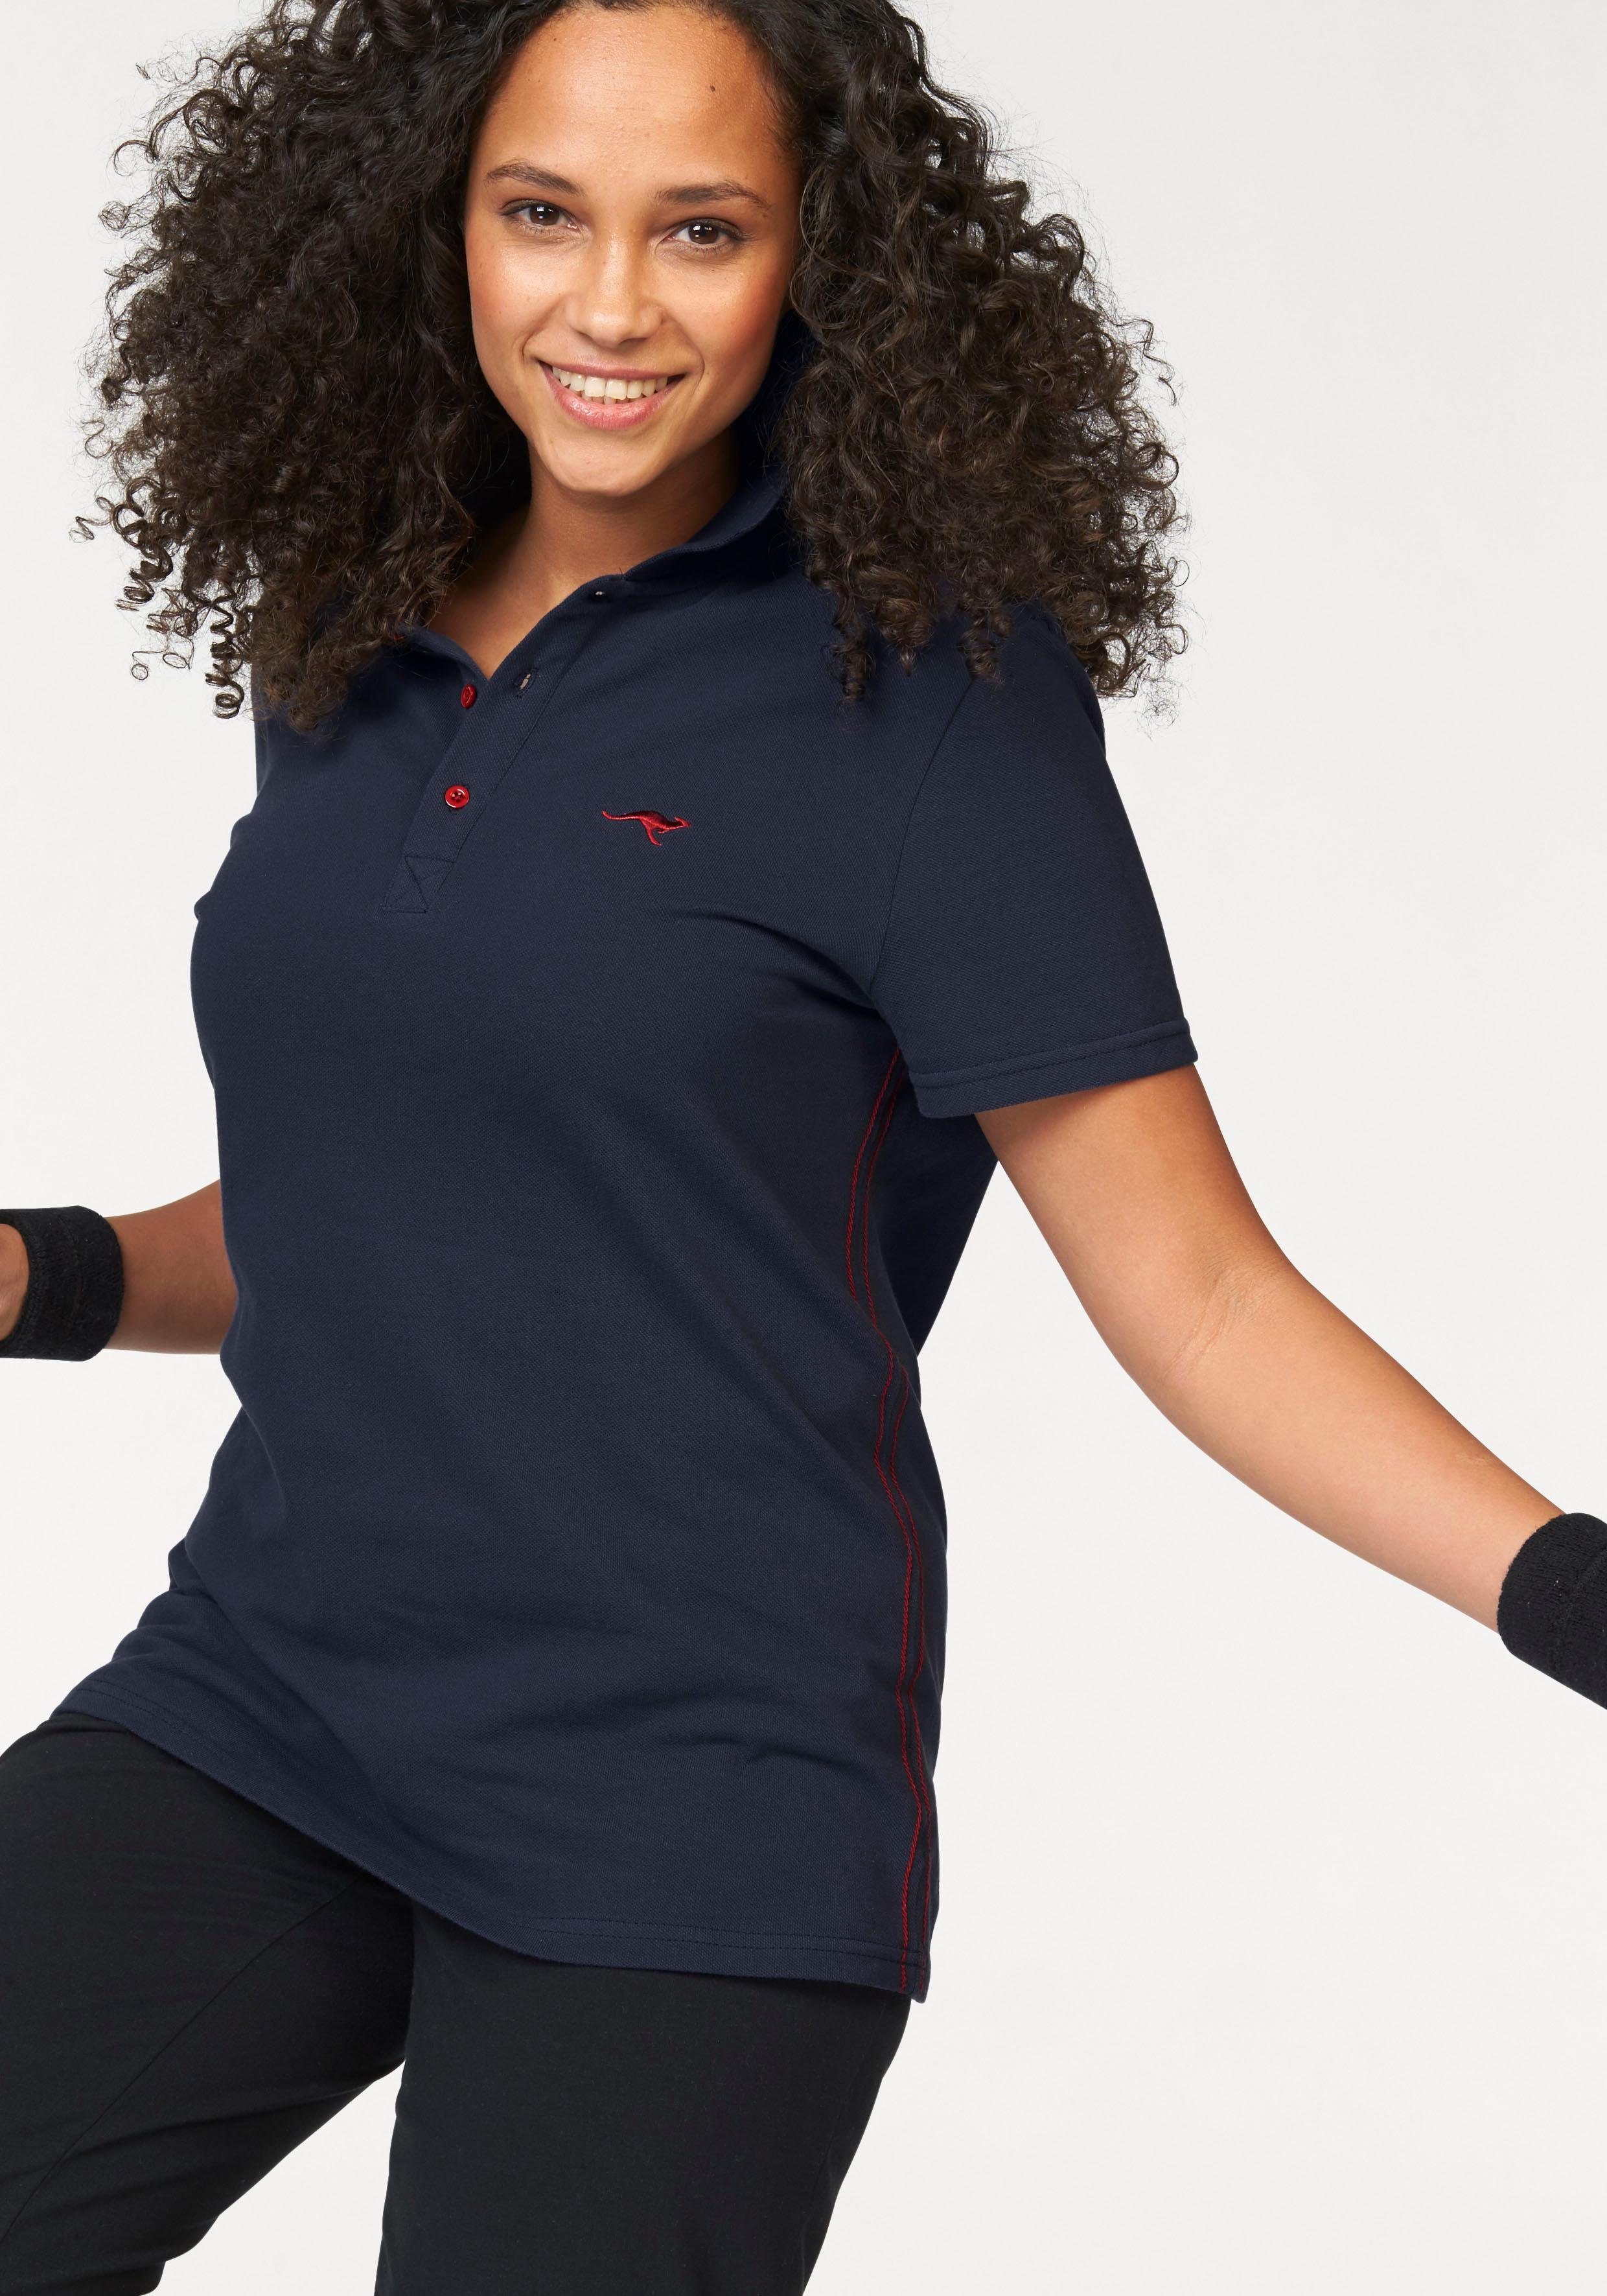 Blaue Damen Poloshirts online kaufen » Polohemd | OTTO